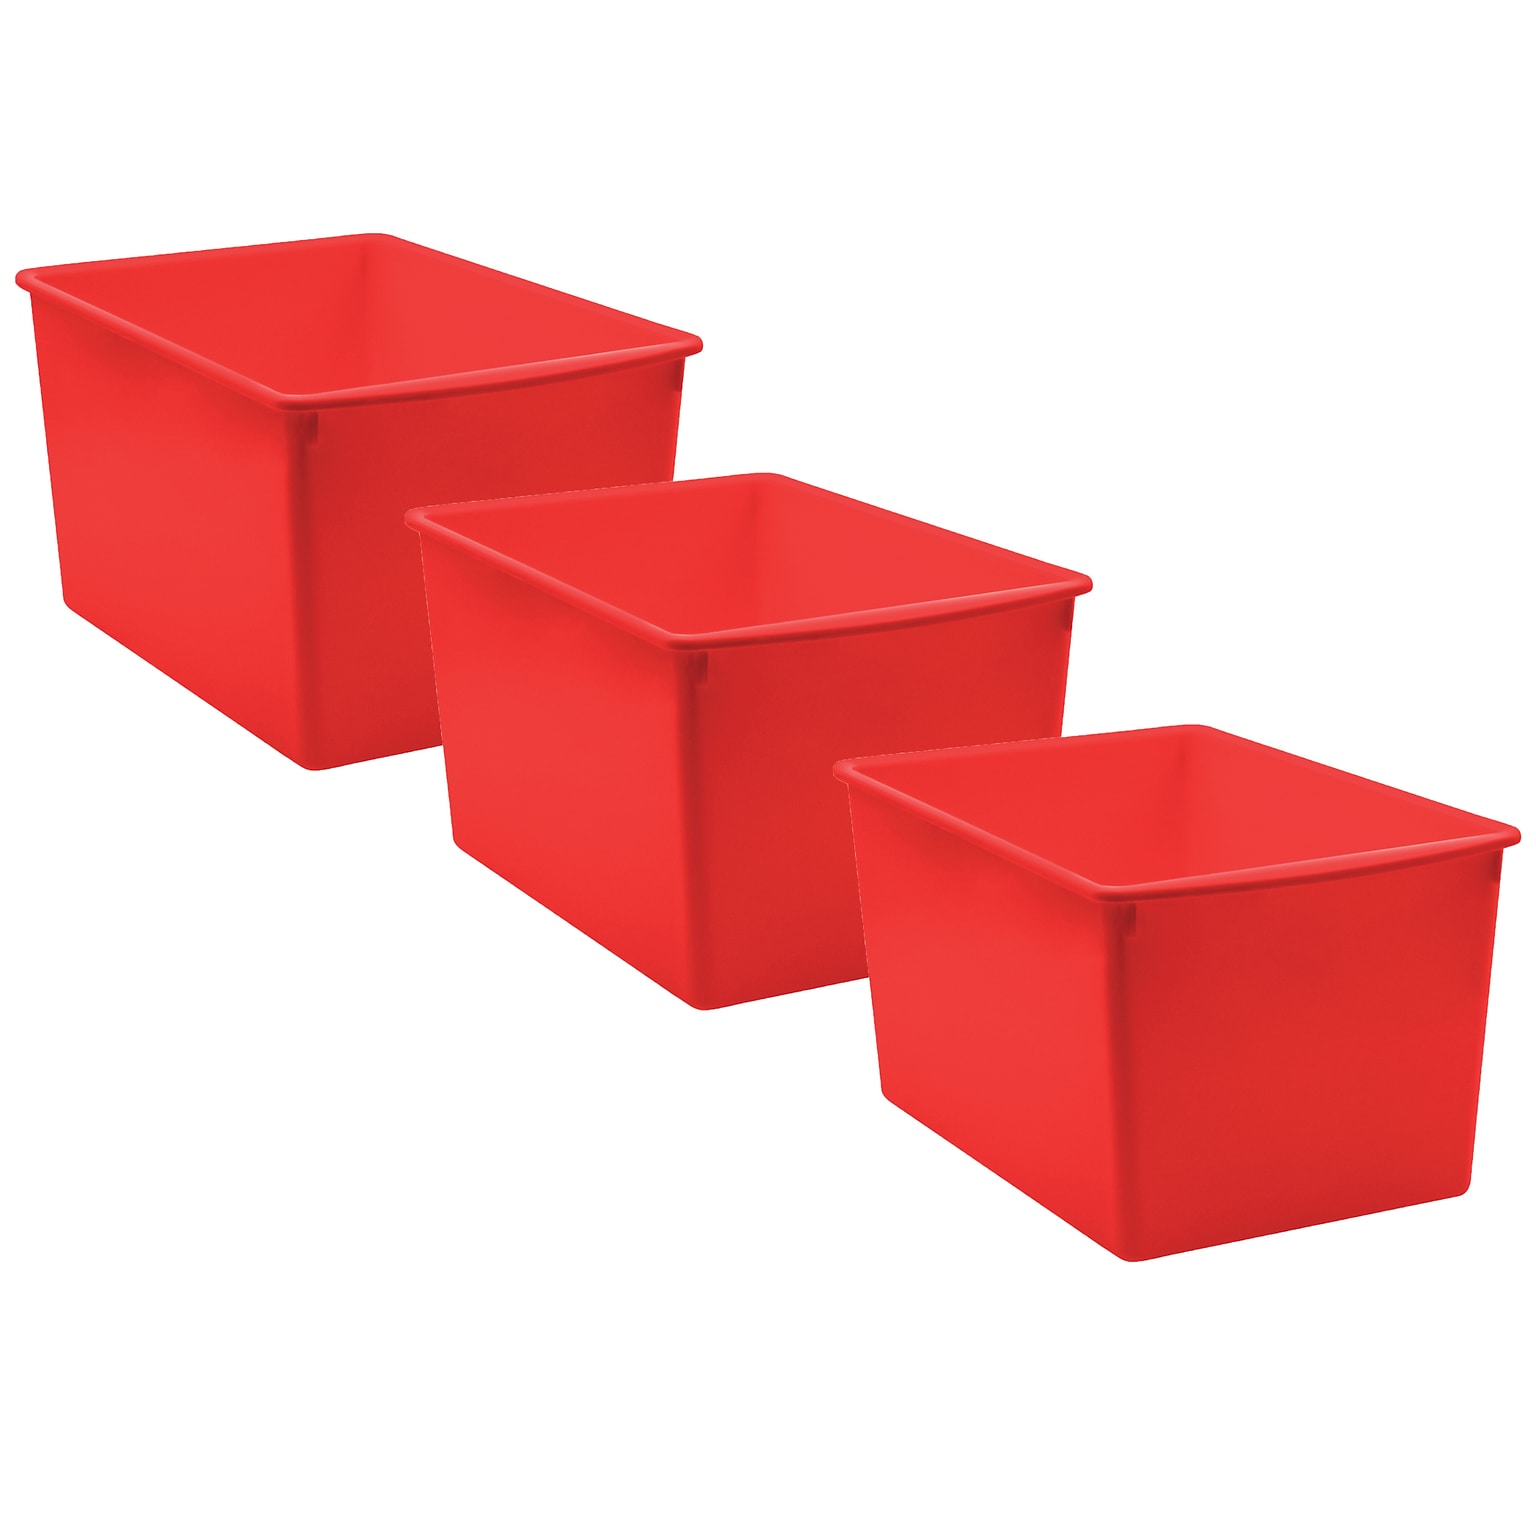 Teacher Created Resources® Plastic Multi-Purpose Bin, 14 x 9.25 x 7.5, Red, Pack of 3 (TCR20432-3)